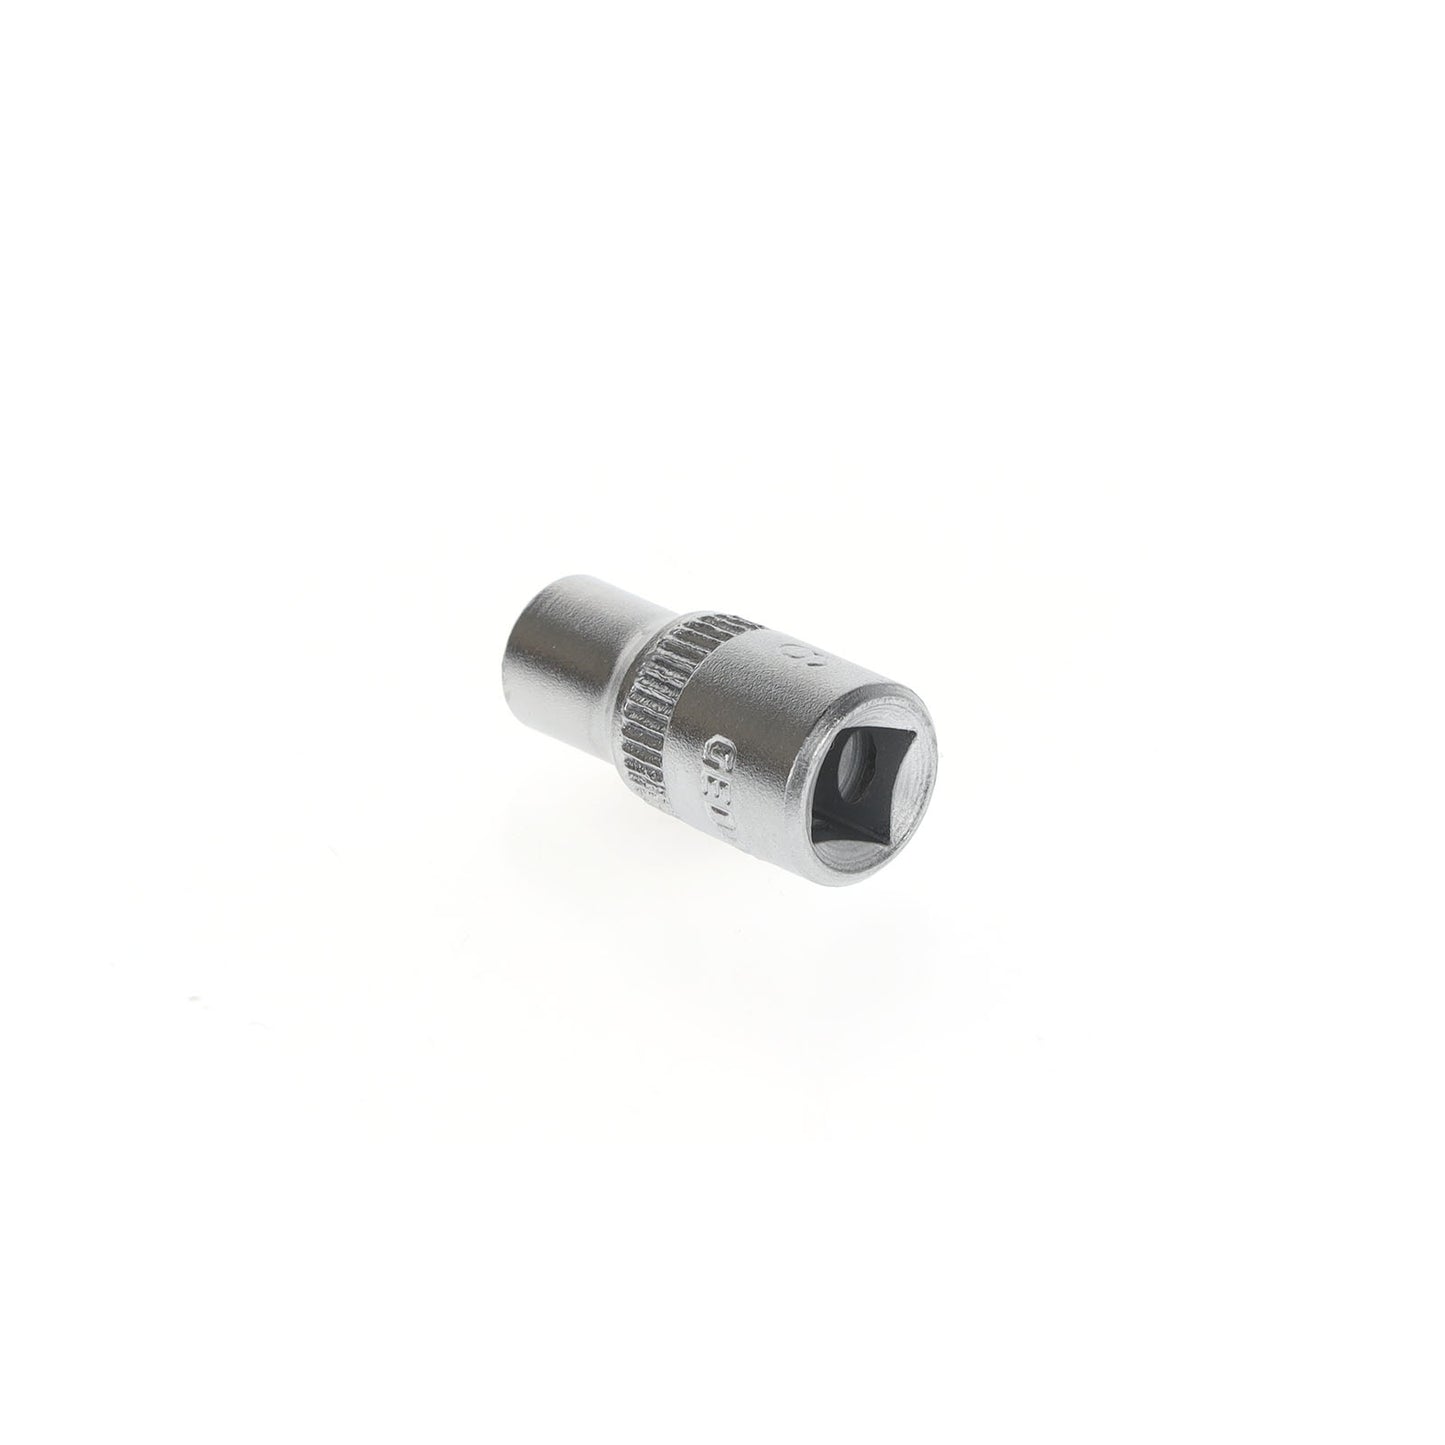 GEDORE 20 6 - Hexagonal socket 1/4", 6 mm (6165830)